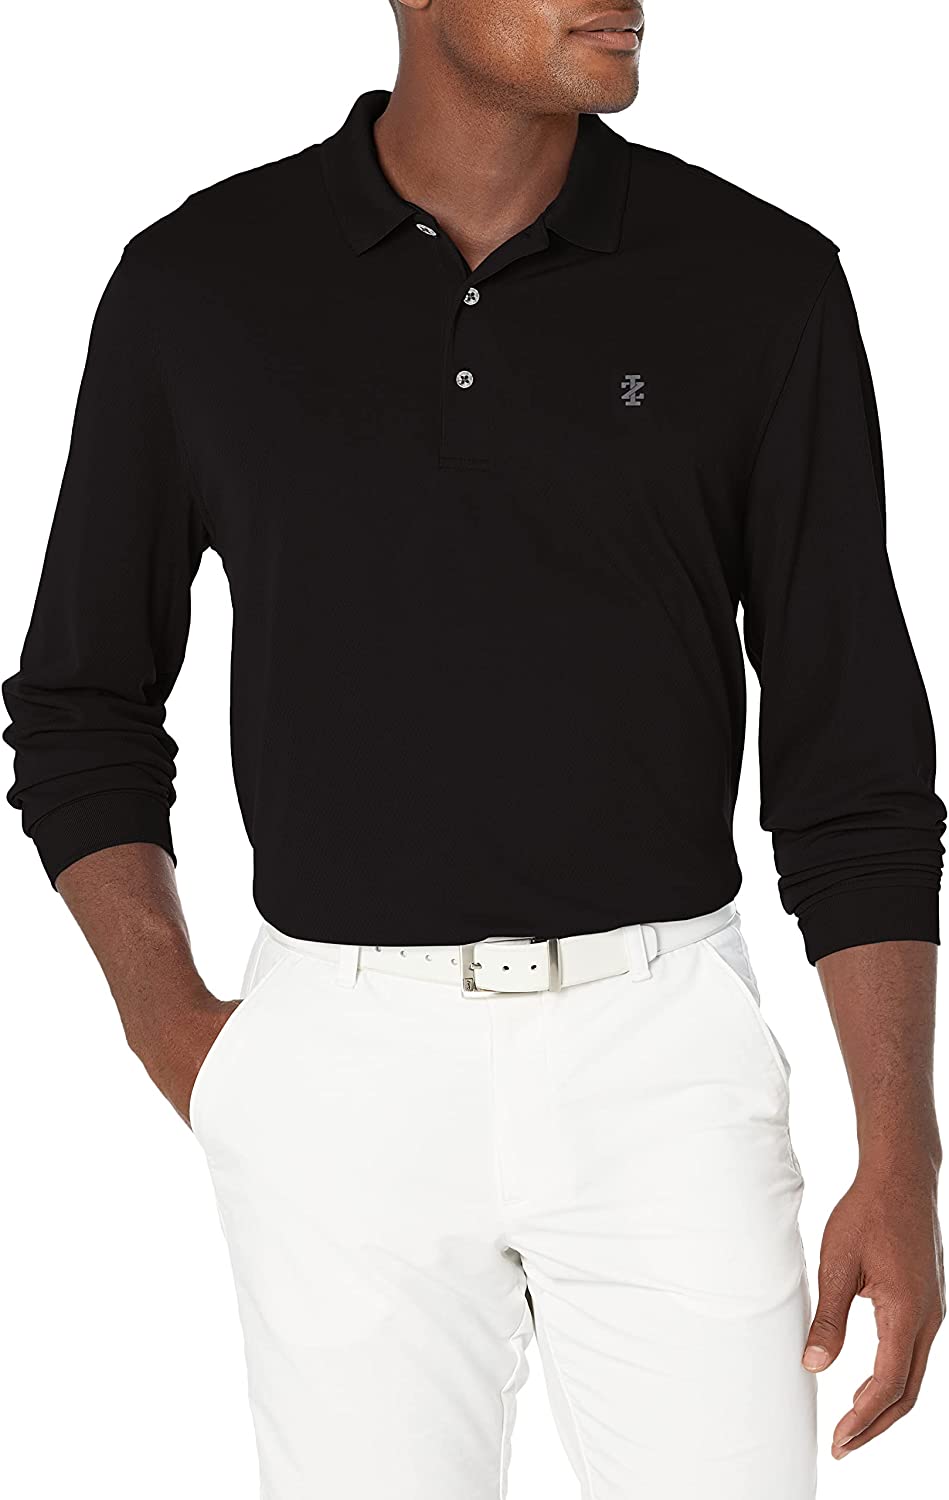 RTRDE Long Sleeve Shirts for Men, Golf Shirts Mens Tall Polo Shirts Shirts  White Men's Lapel Printed Casual Top Loose Sports Shirt Shirt Big and Shirts  Men (M, Black)